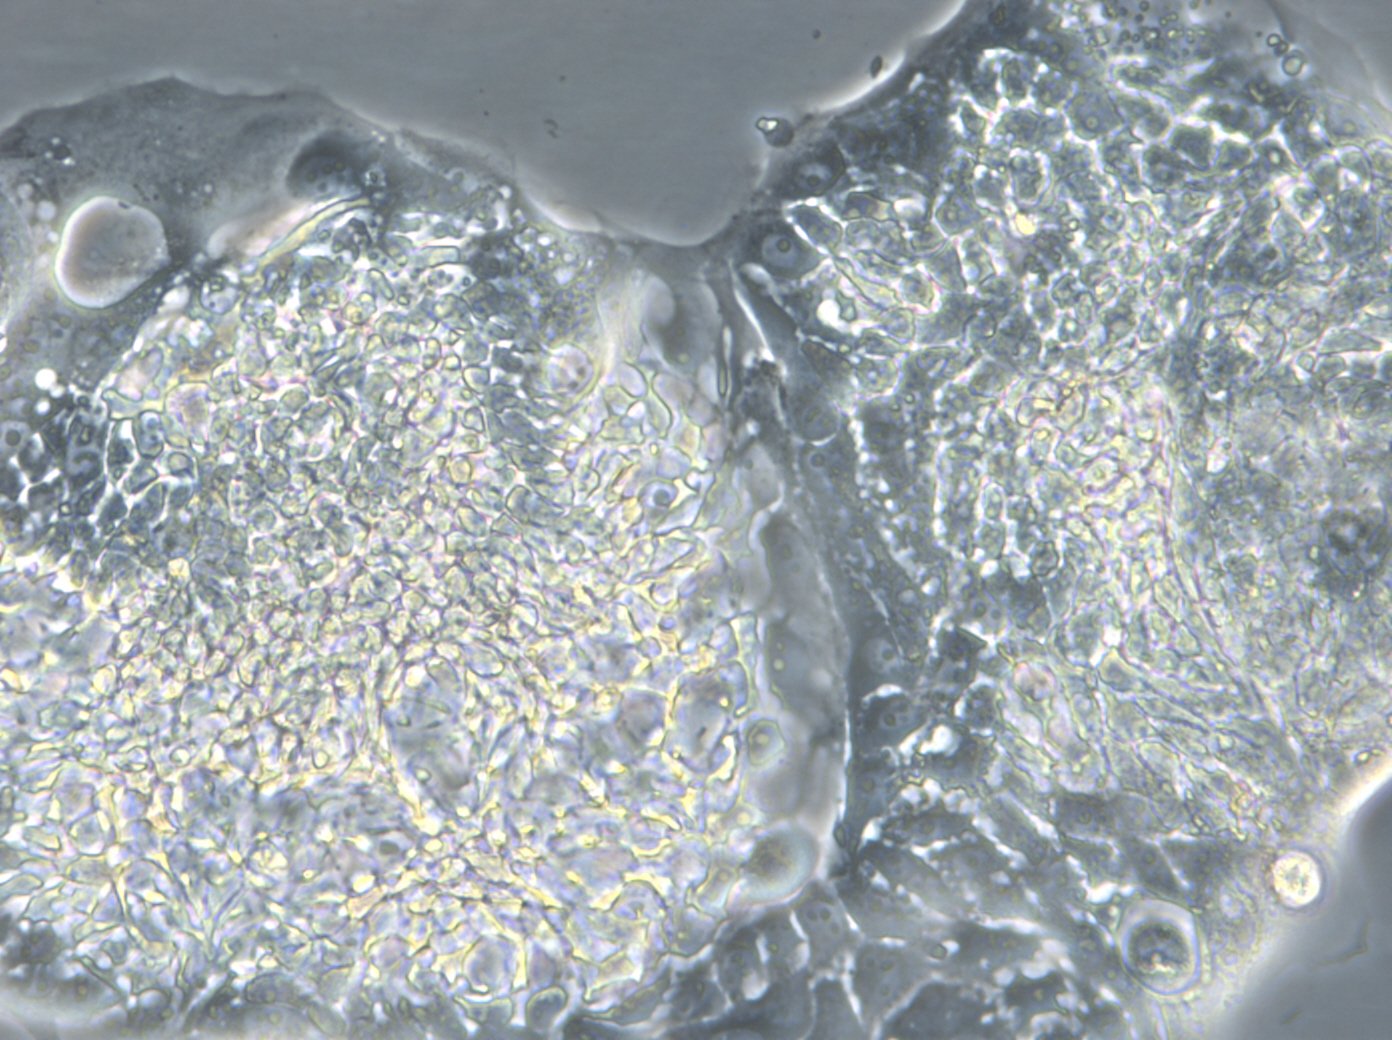 HROC43 Cells